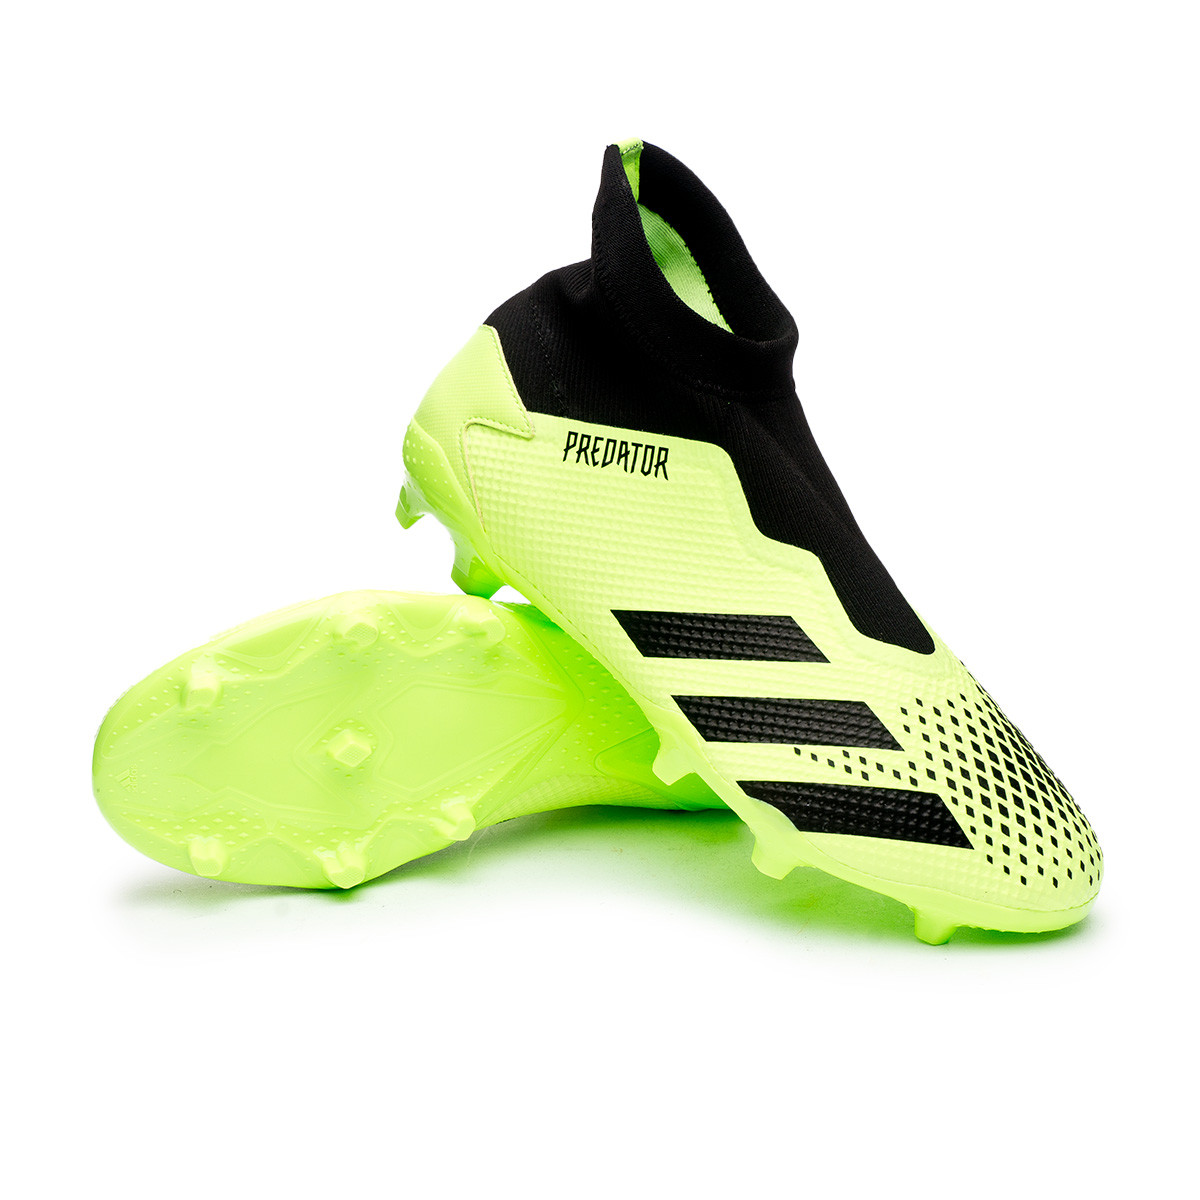 green and black adidas football boots